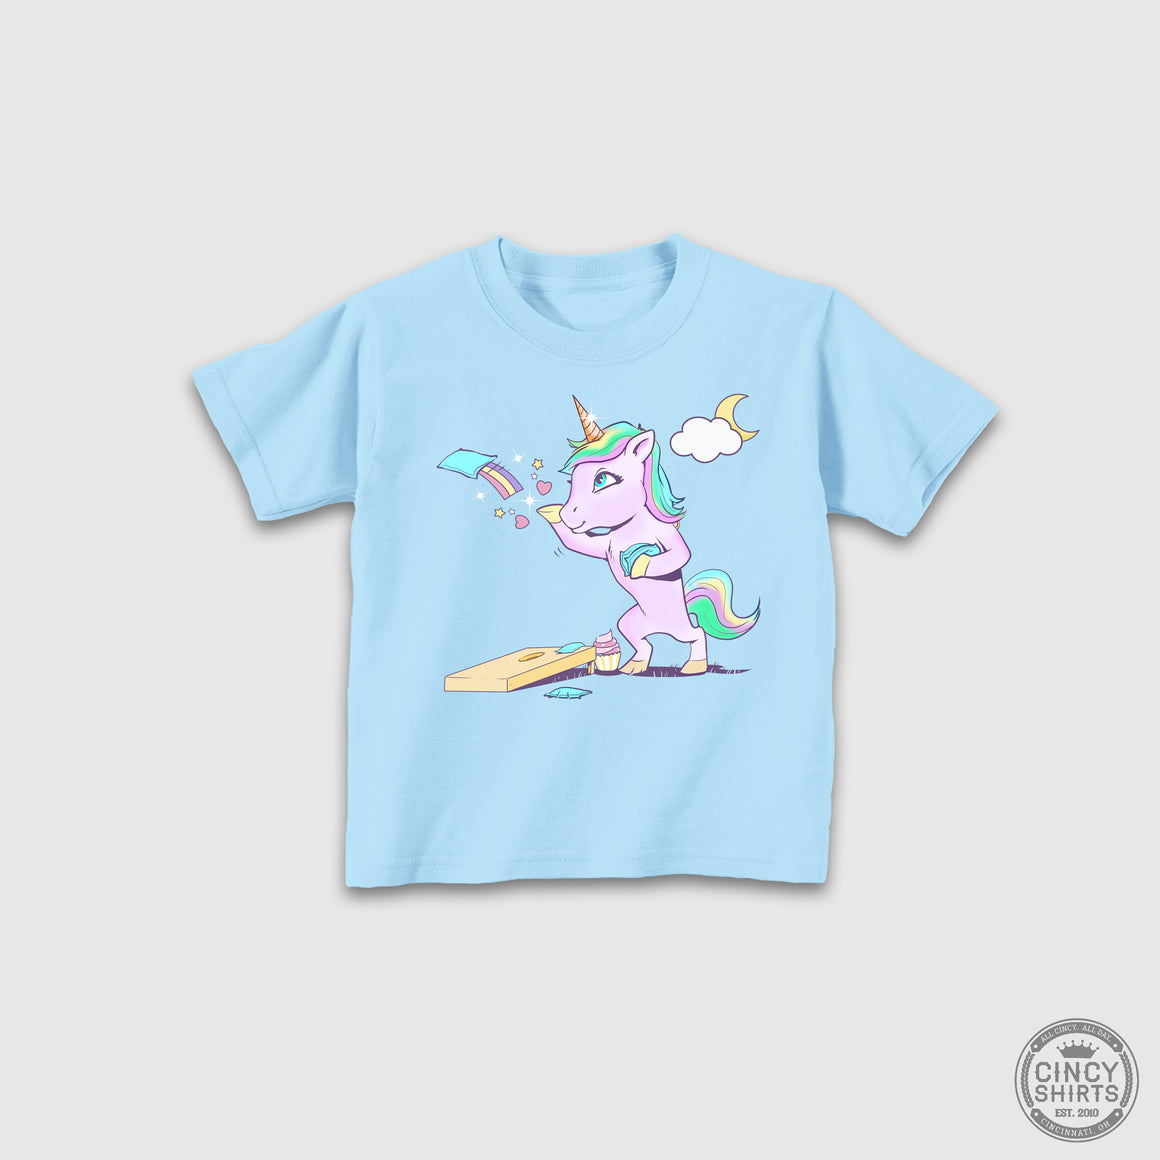 Unicornhole - Cincy Shirts